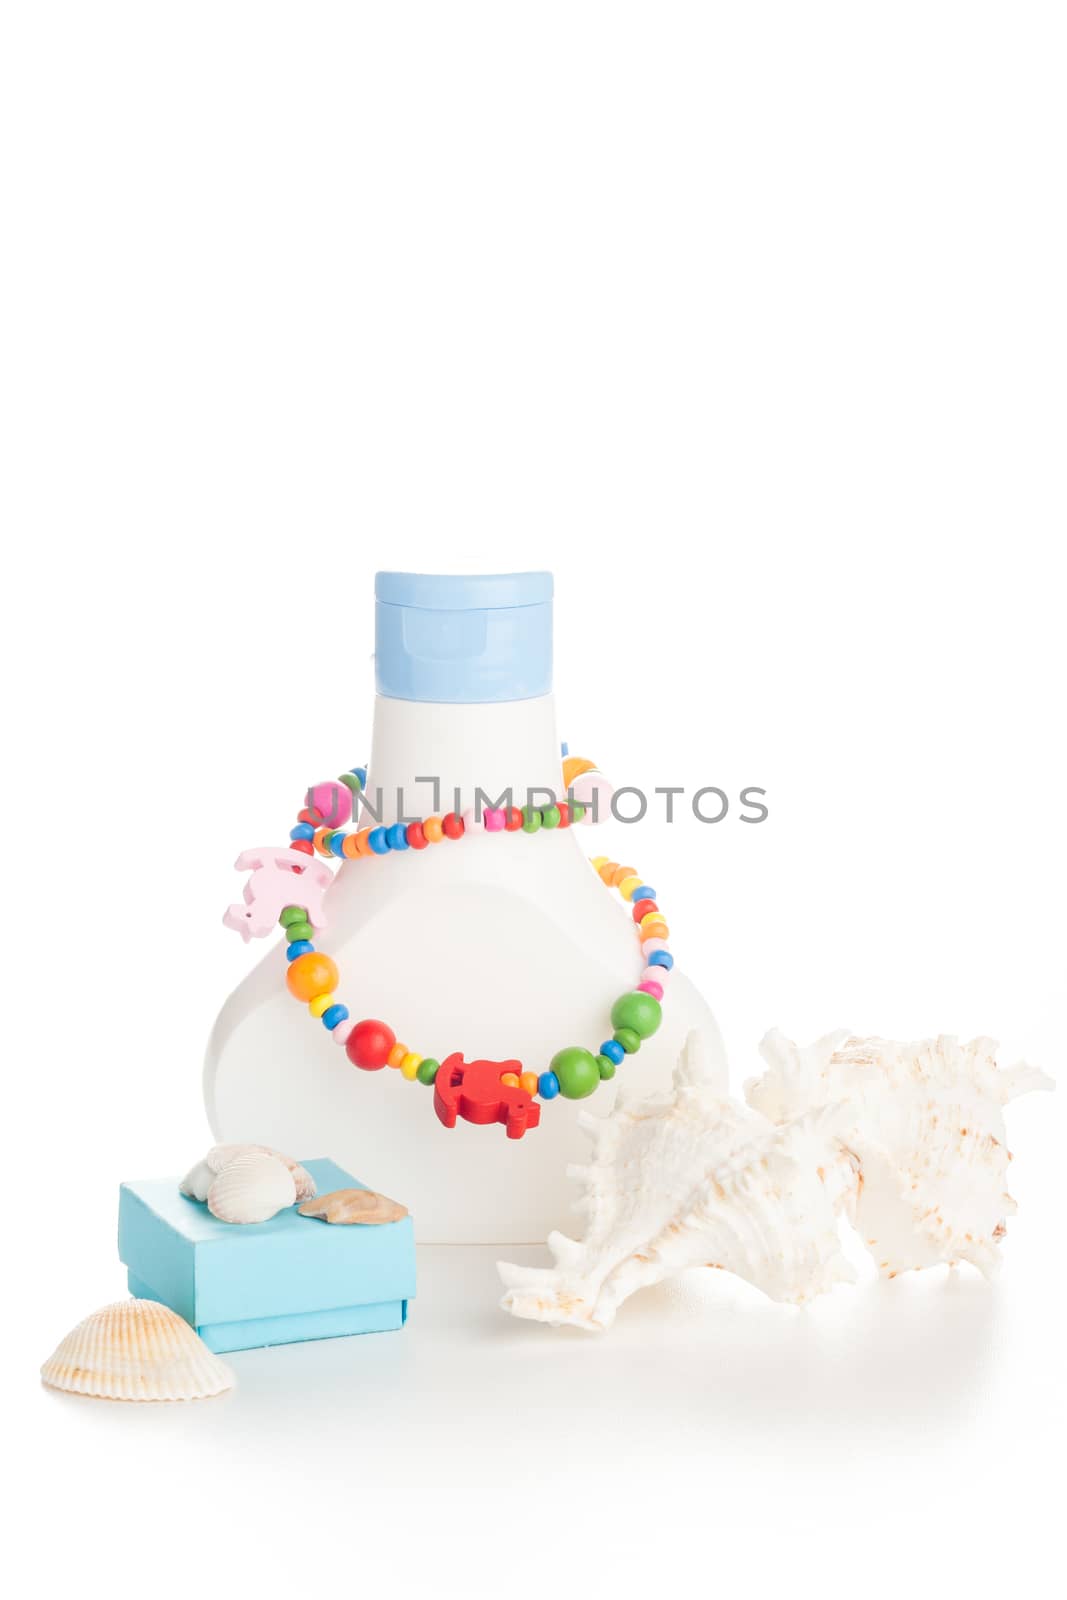 lotion bottle with seashells by furo_felix